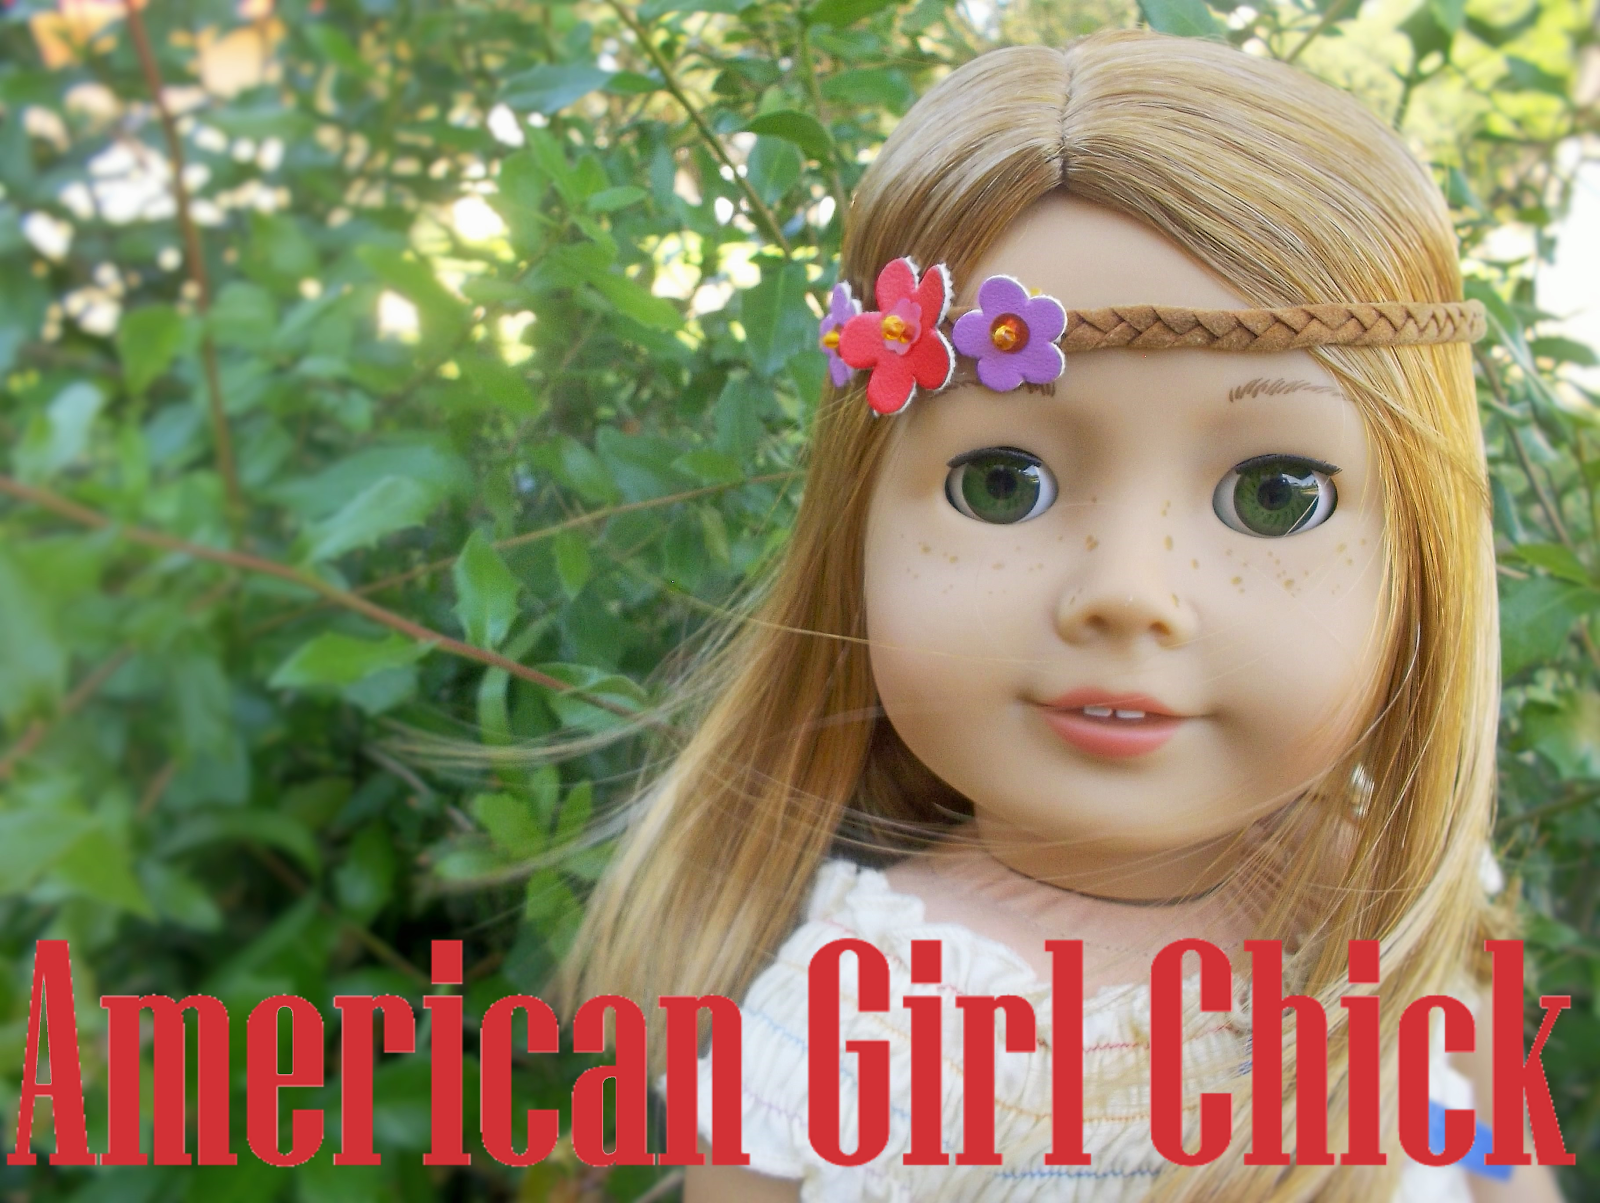 American Girl Chick